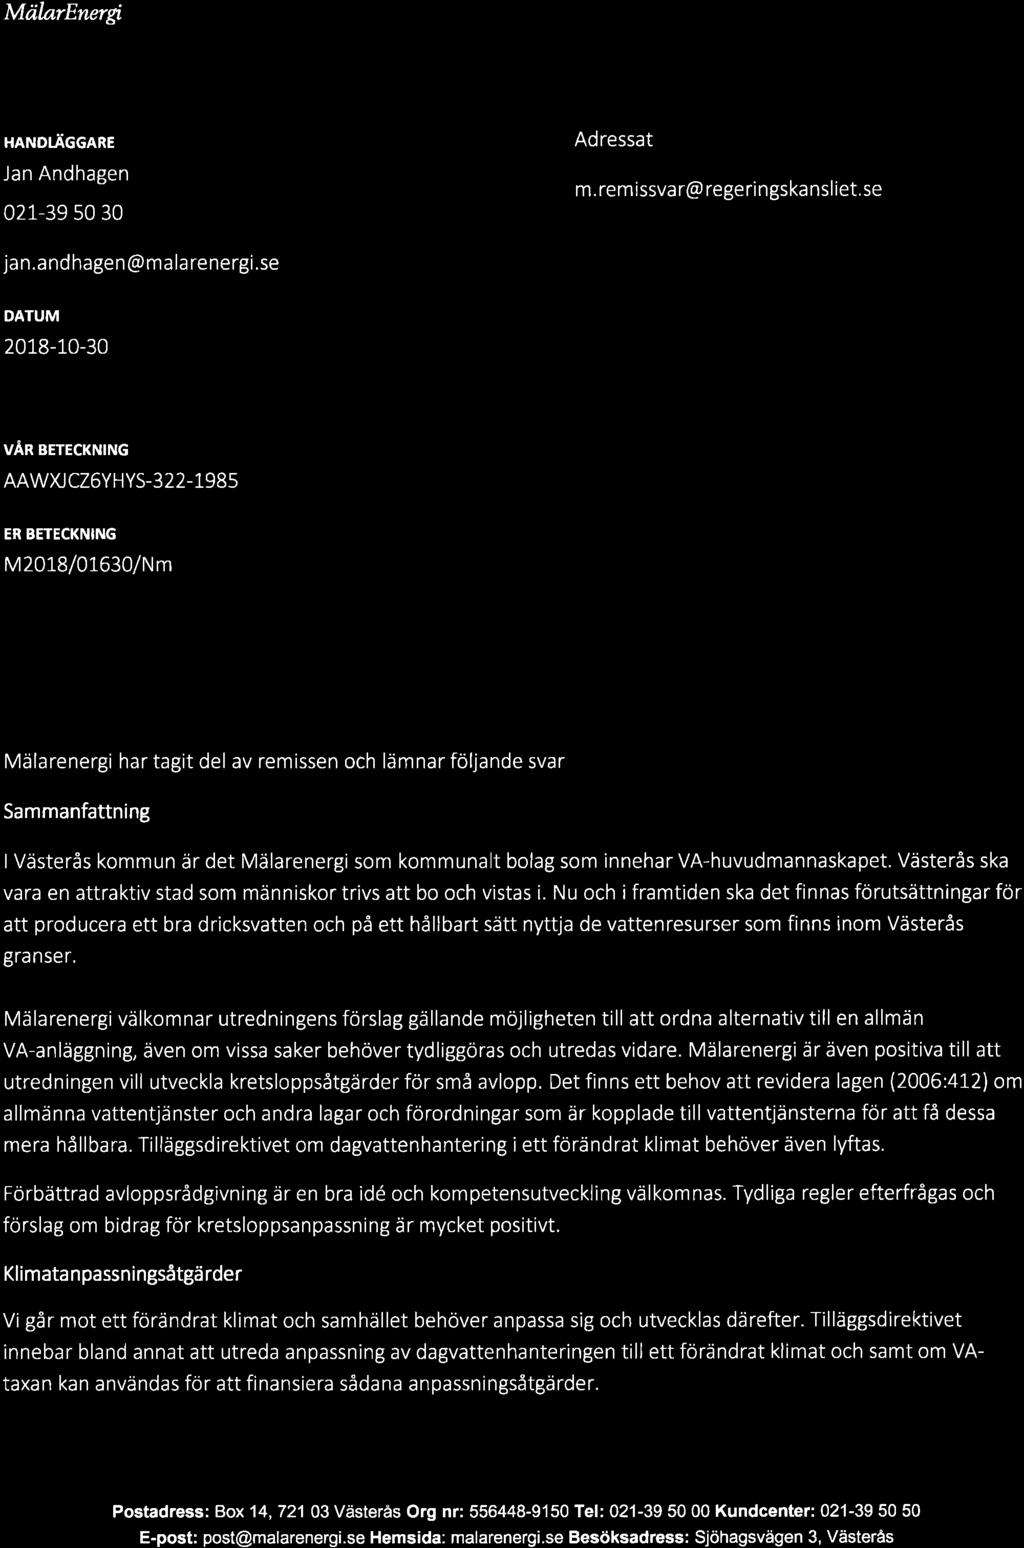 4 HANDLÄGGARE Jan Andhagen 021 39 50 30 Ad ressat m.remissvar@regeringskansliet.se jan.andhagen@malarenergi.